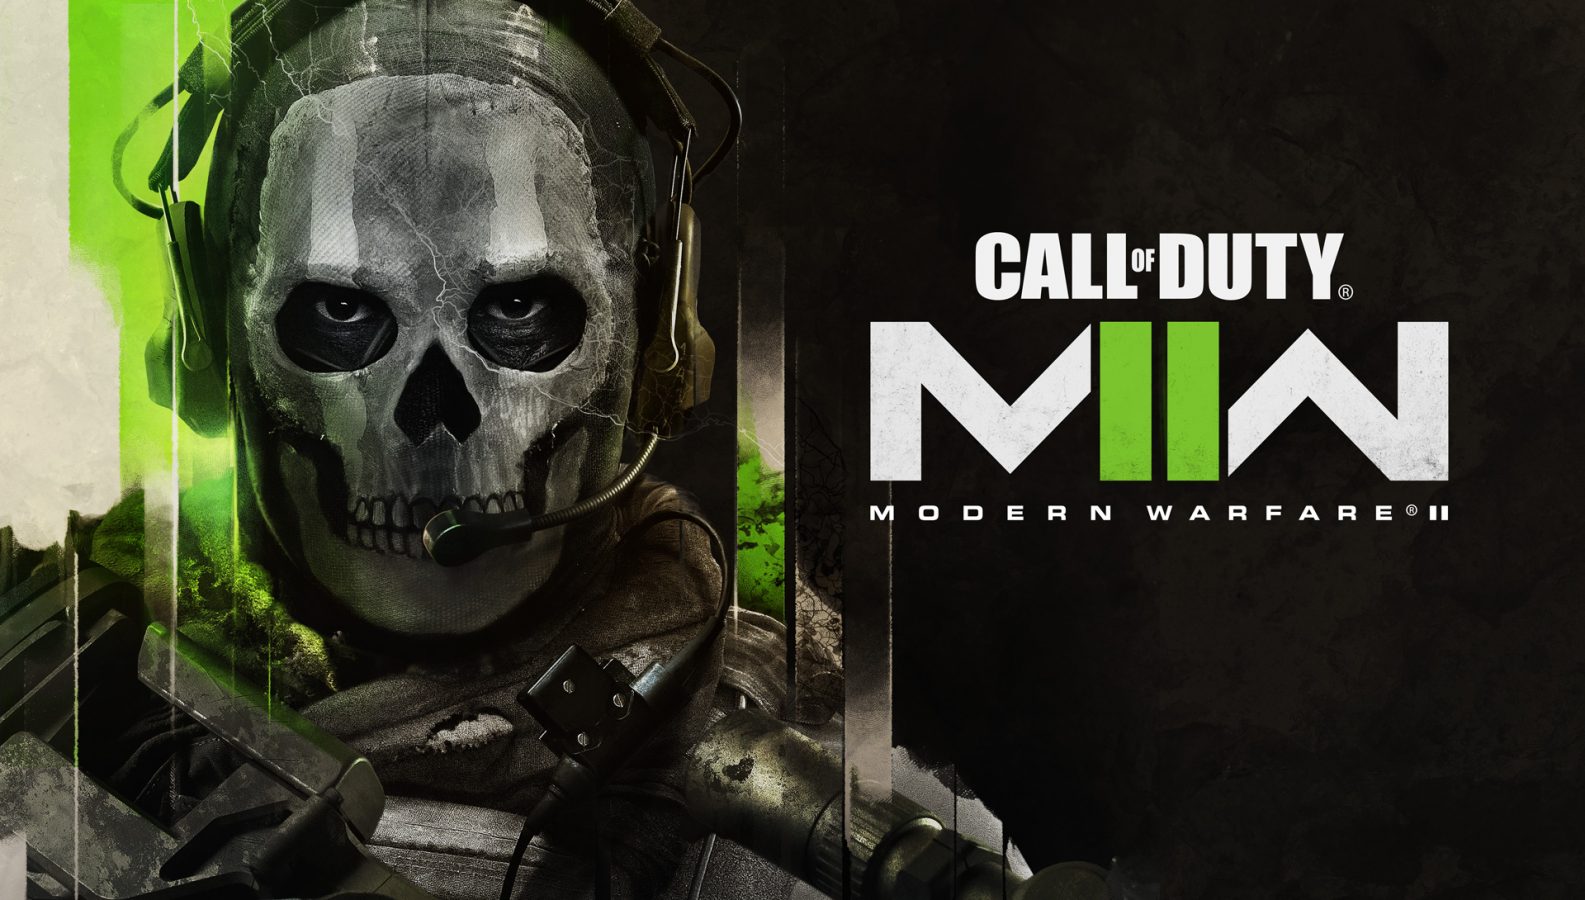 Modern Warfare 3 multiplayer reveal trailer excites fans